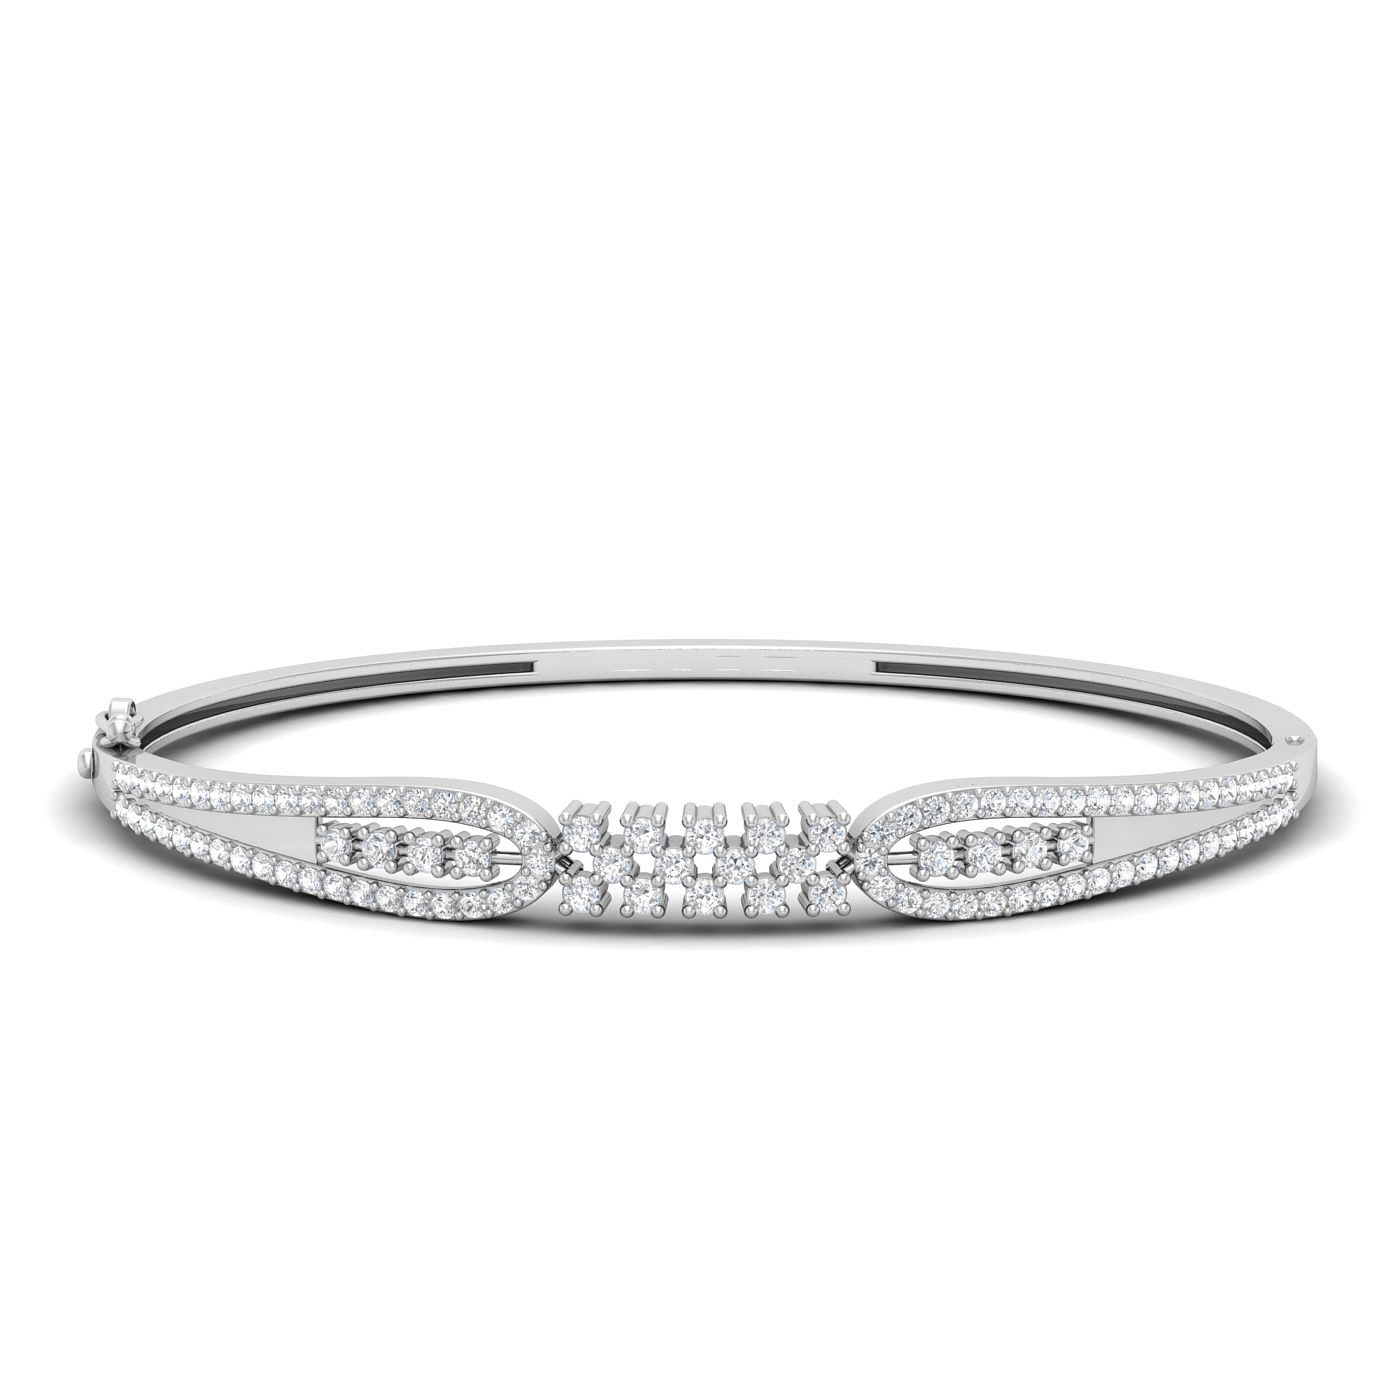 White gold Poppy Flew Diamond Bracelet for wedding